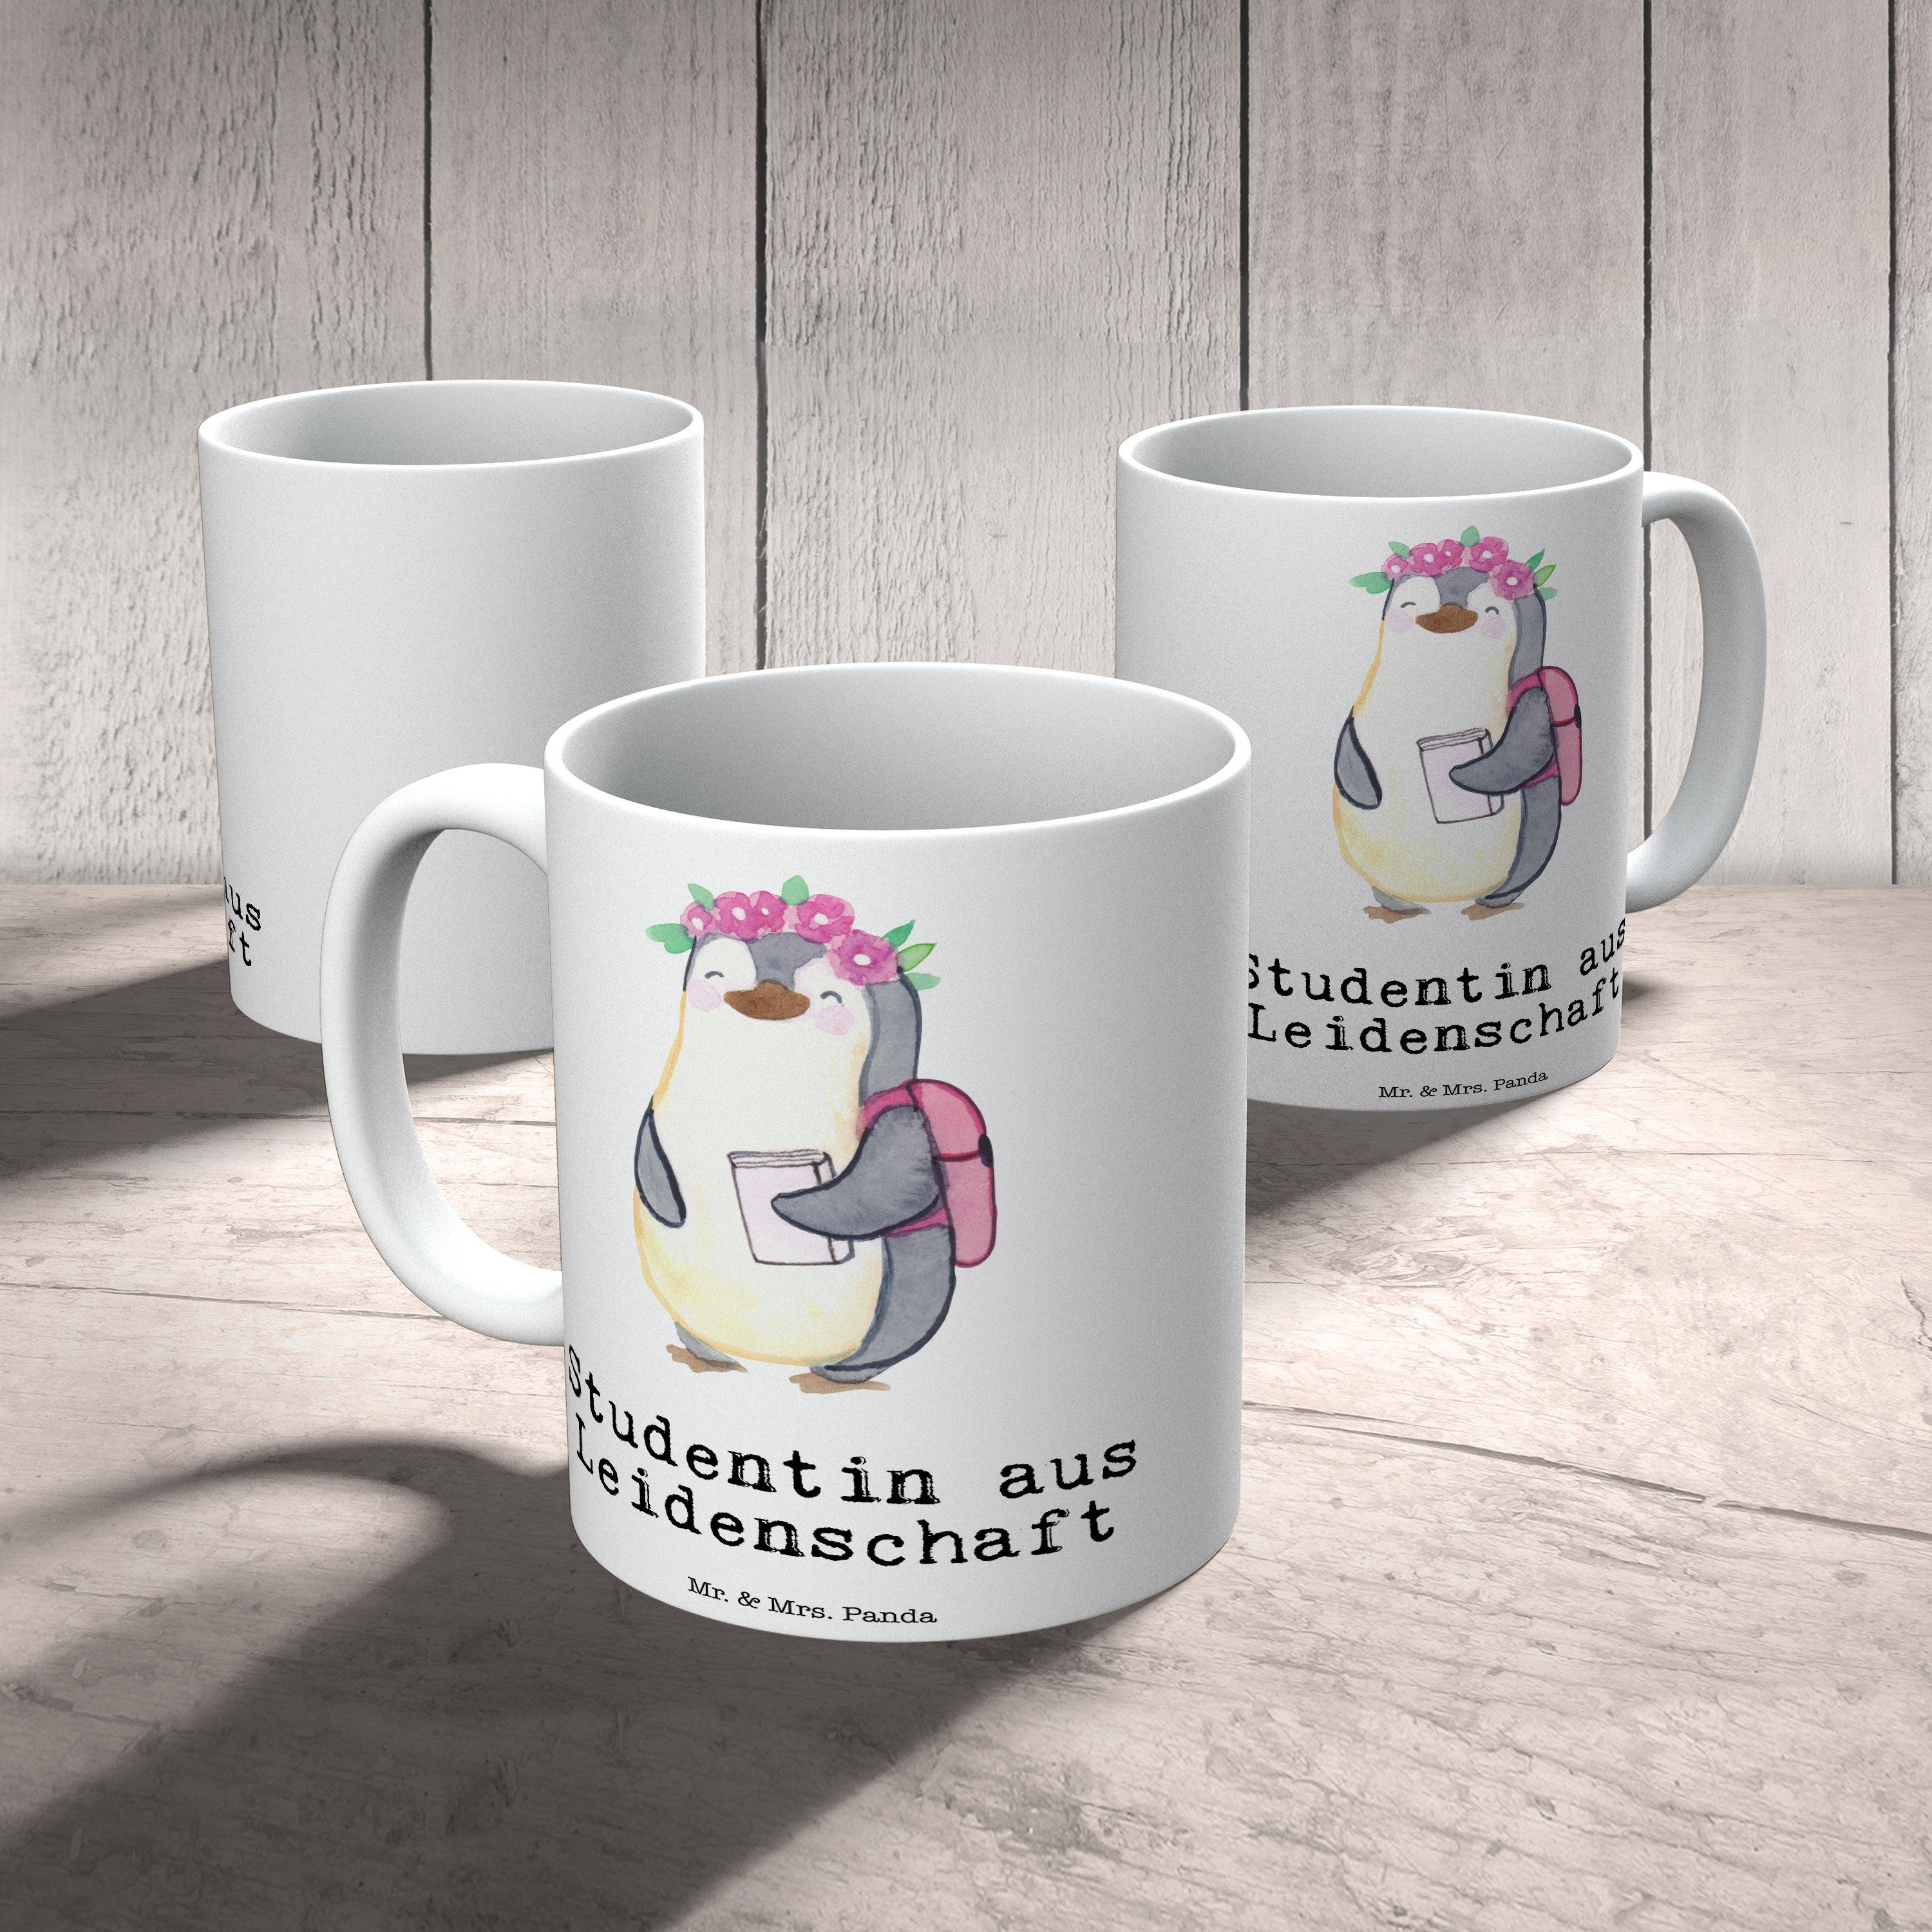 Mr. & Mrs. Weiß Kaffeebecher, aus Studentin - Panda - Teetasse, Geschenk, Tasse Leidenschaft Keramik